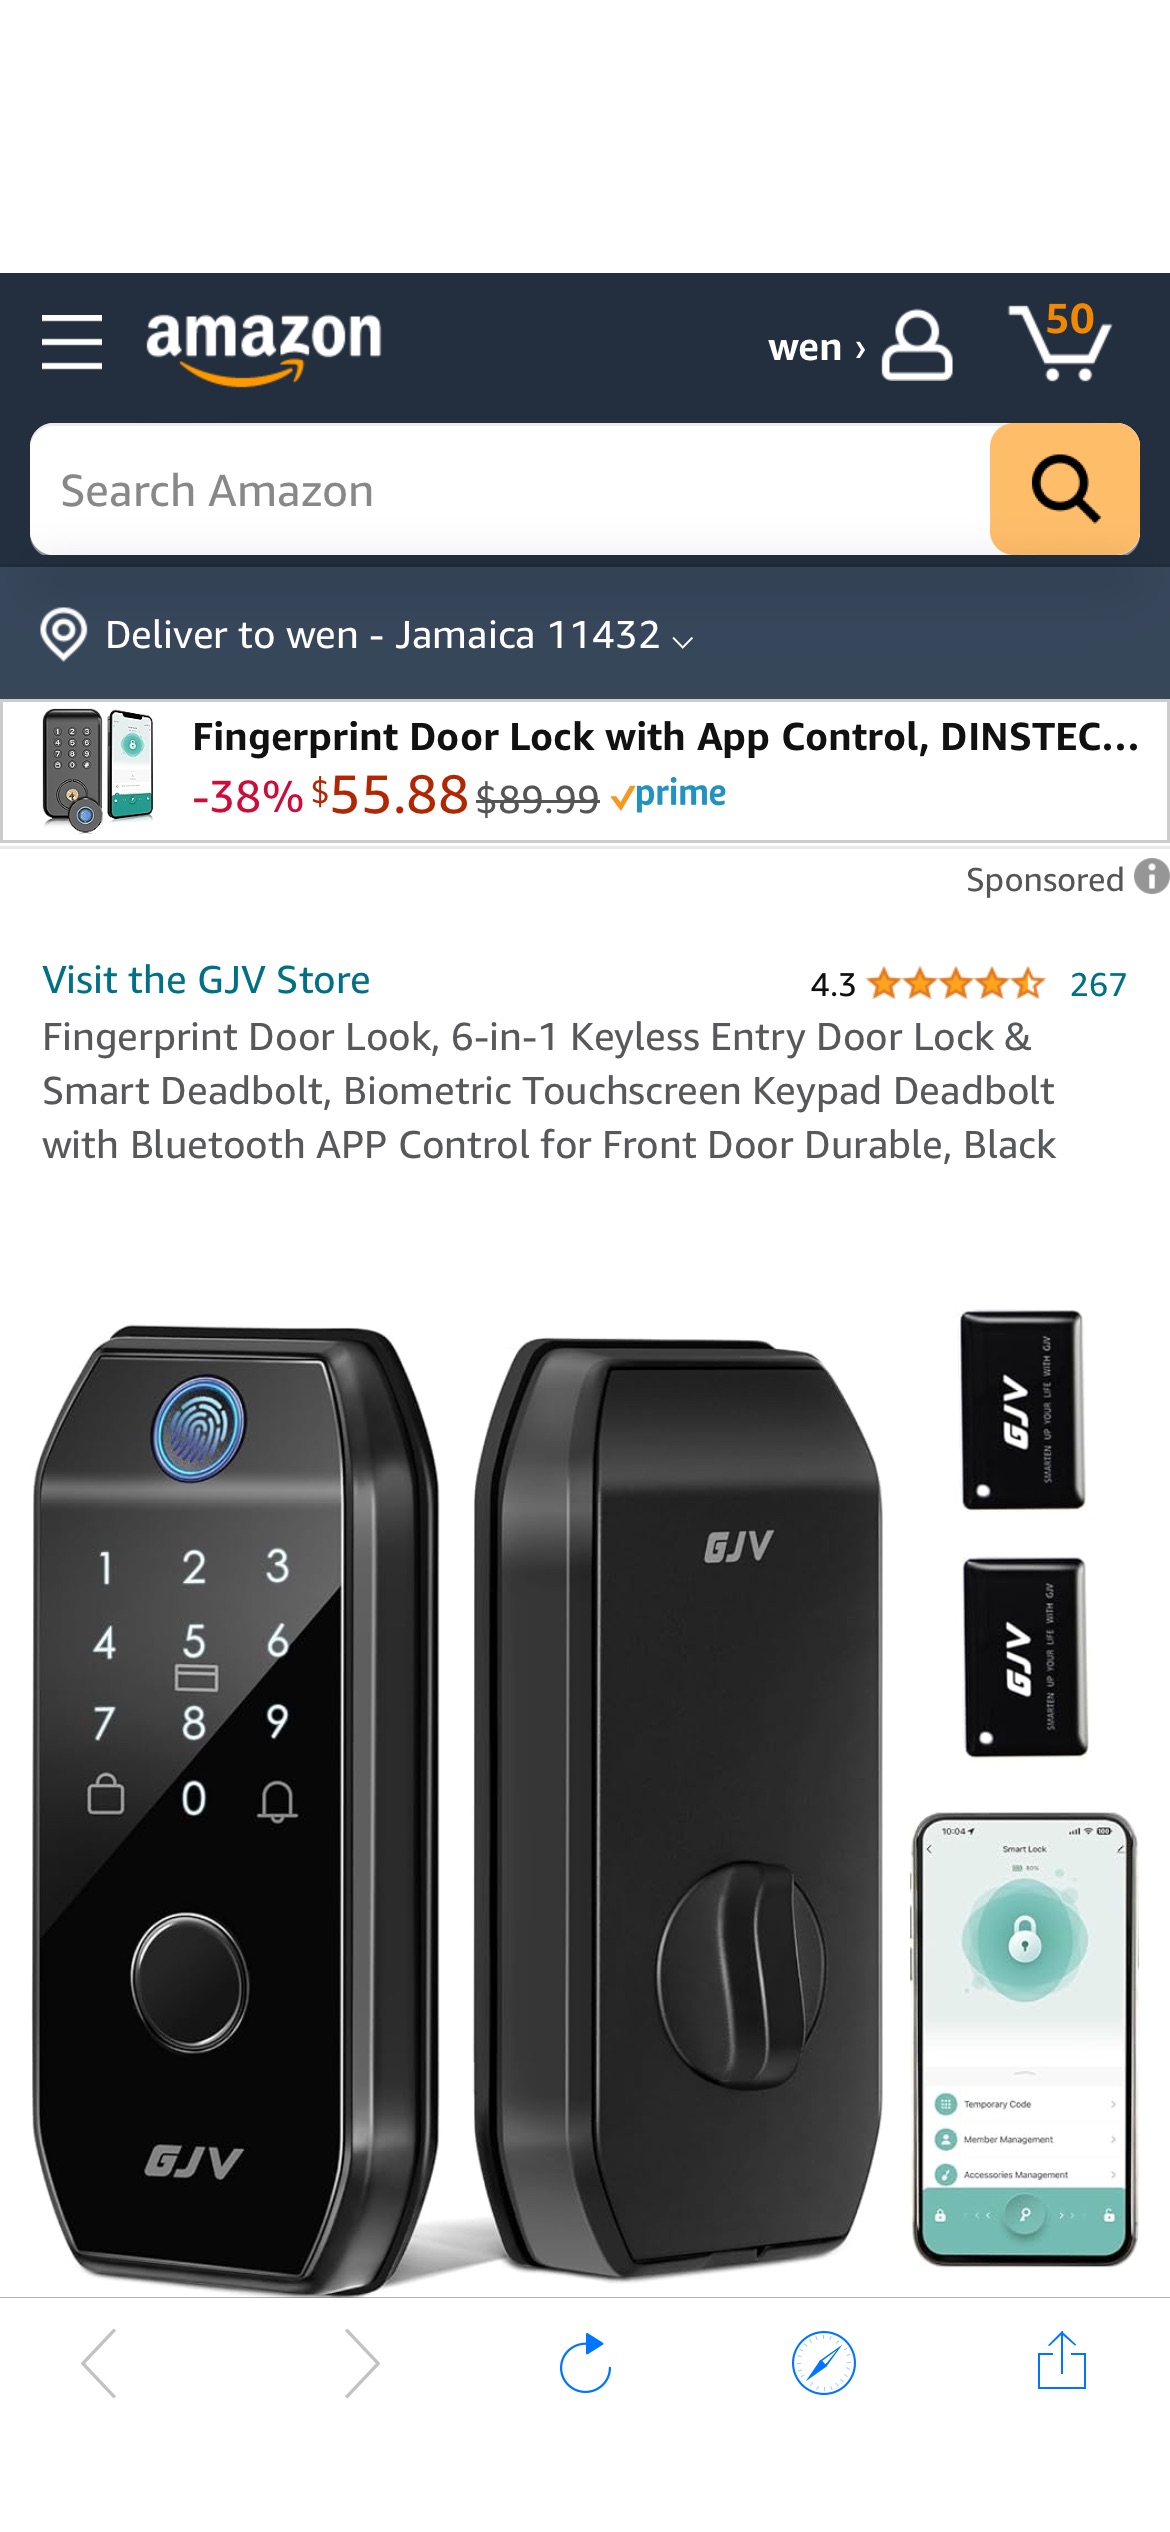 GJV Fingerprint Door Look, 6-in-1 Keyless Entry Door Lock & Smart Deadbolt, Biometric Touchscreen Keypad Deadbolt with Bluetooth APP Control for Front Door Durable, Black - Amazon.com